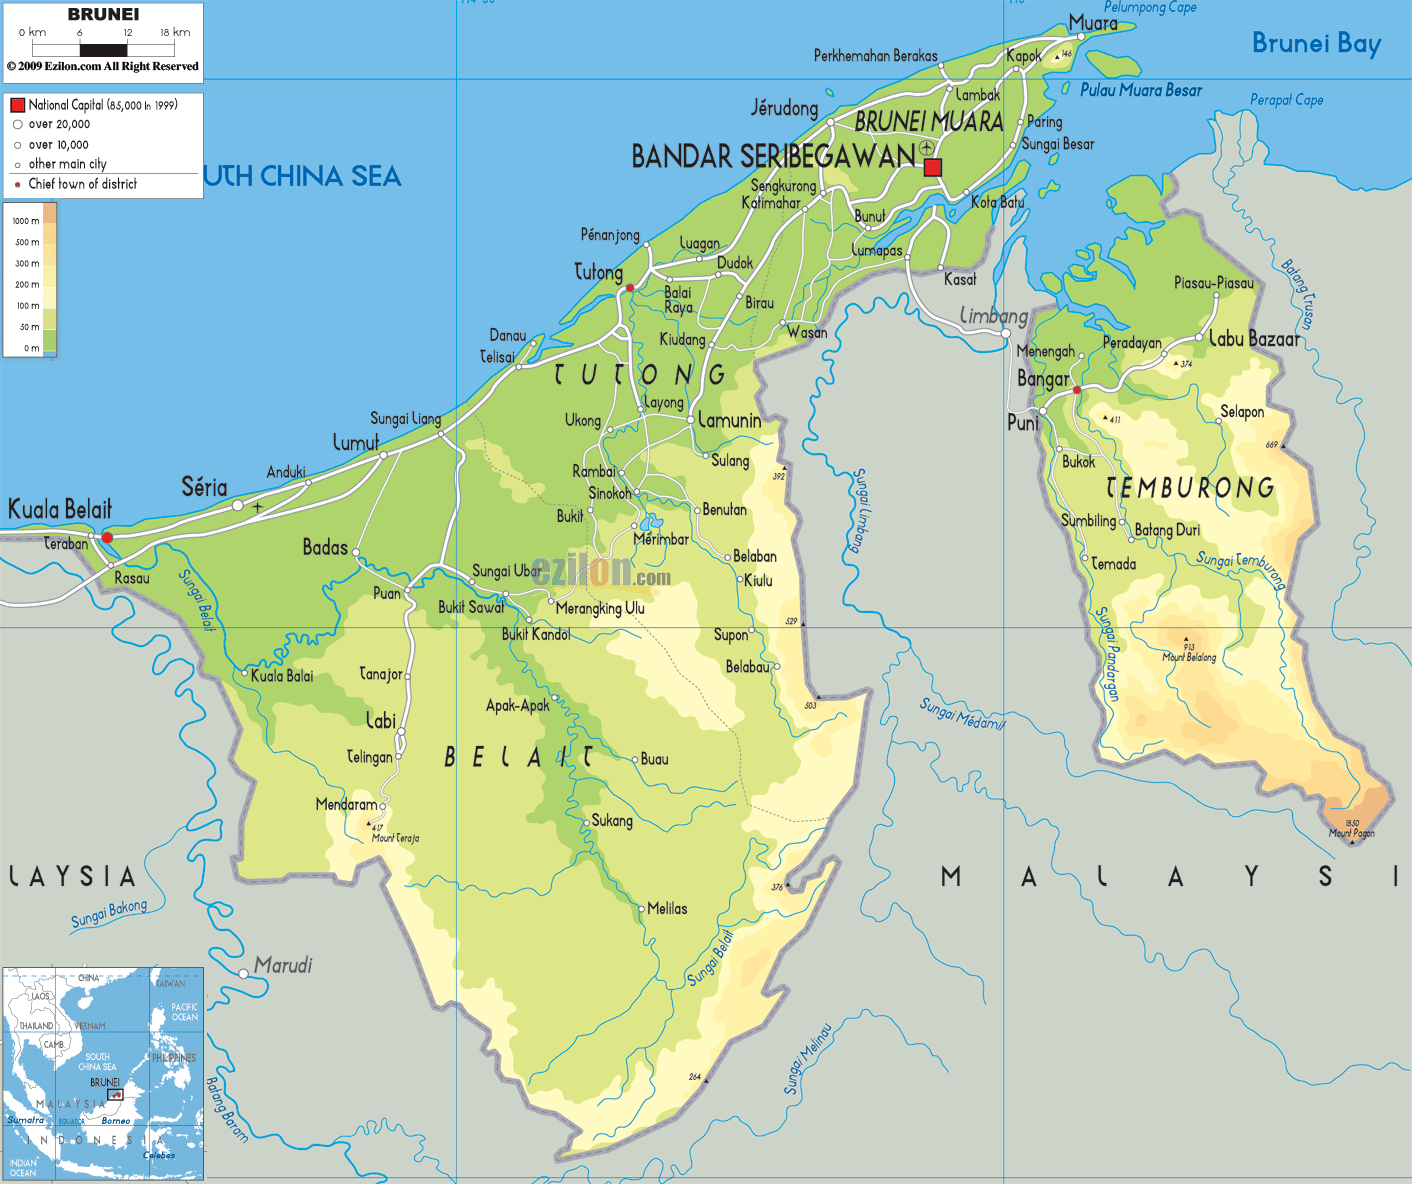 Brunei politique carte